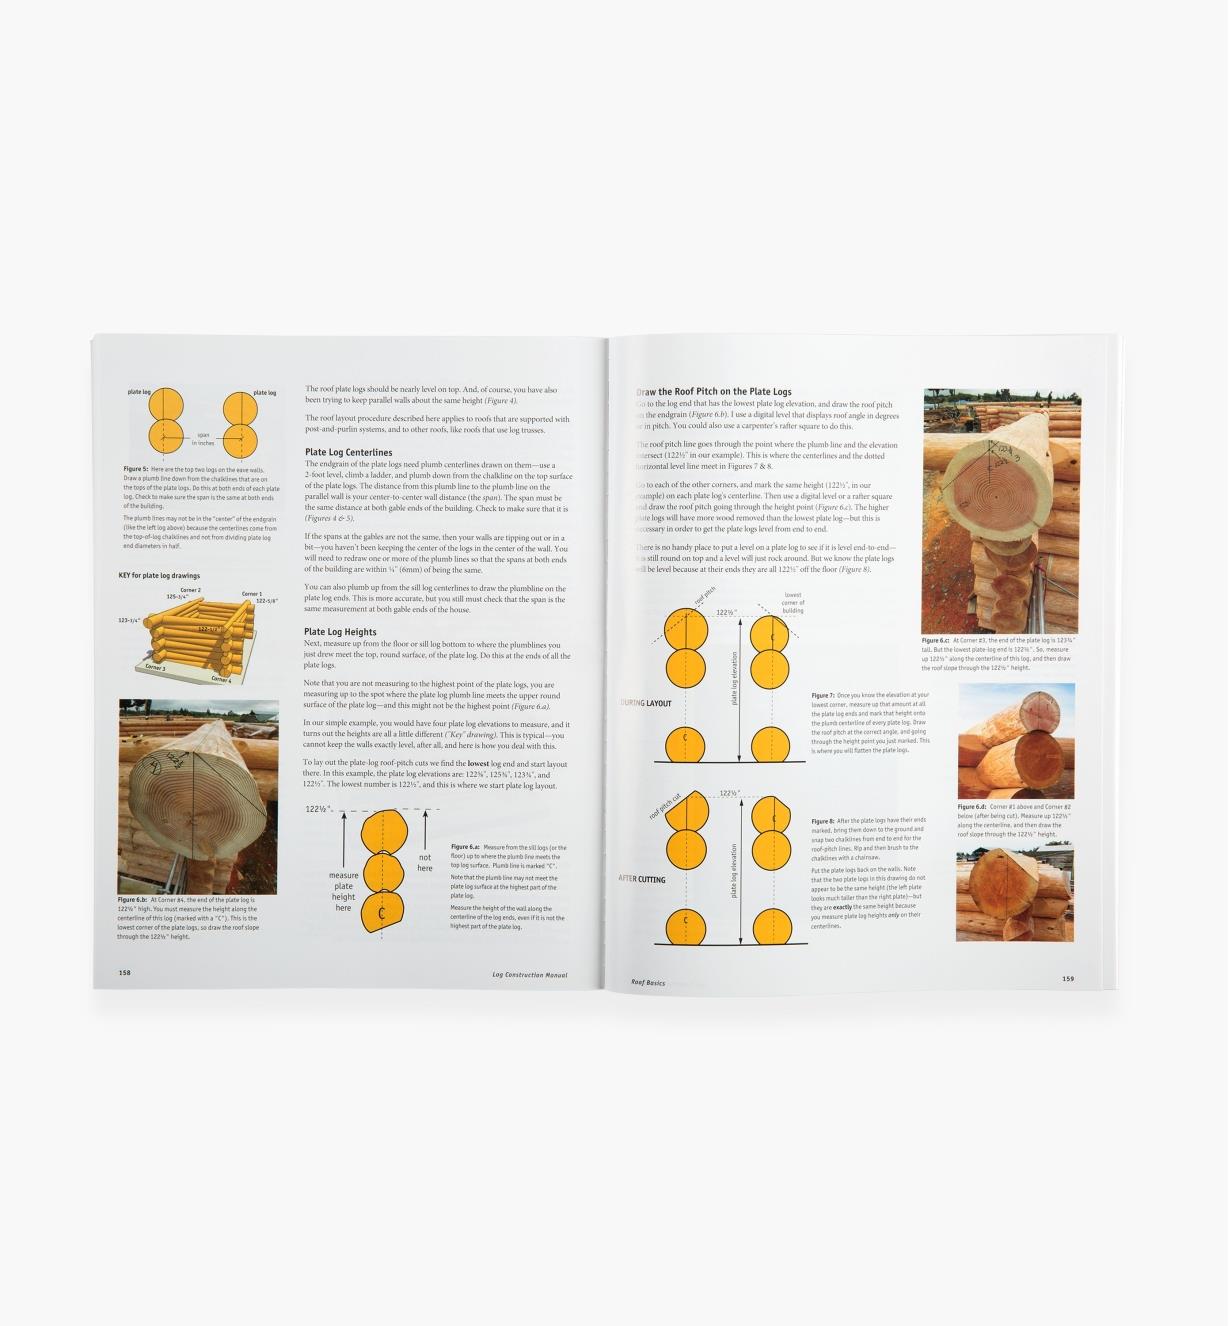 42L7405 - Log Construction Manual, 2016 edition